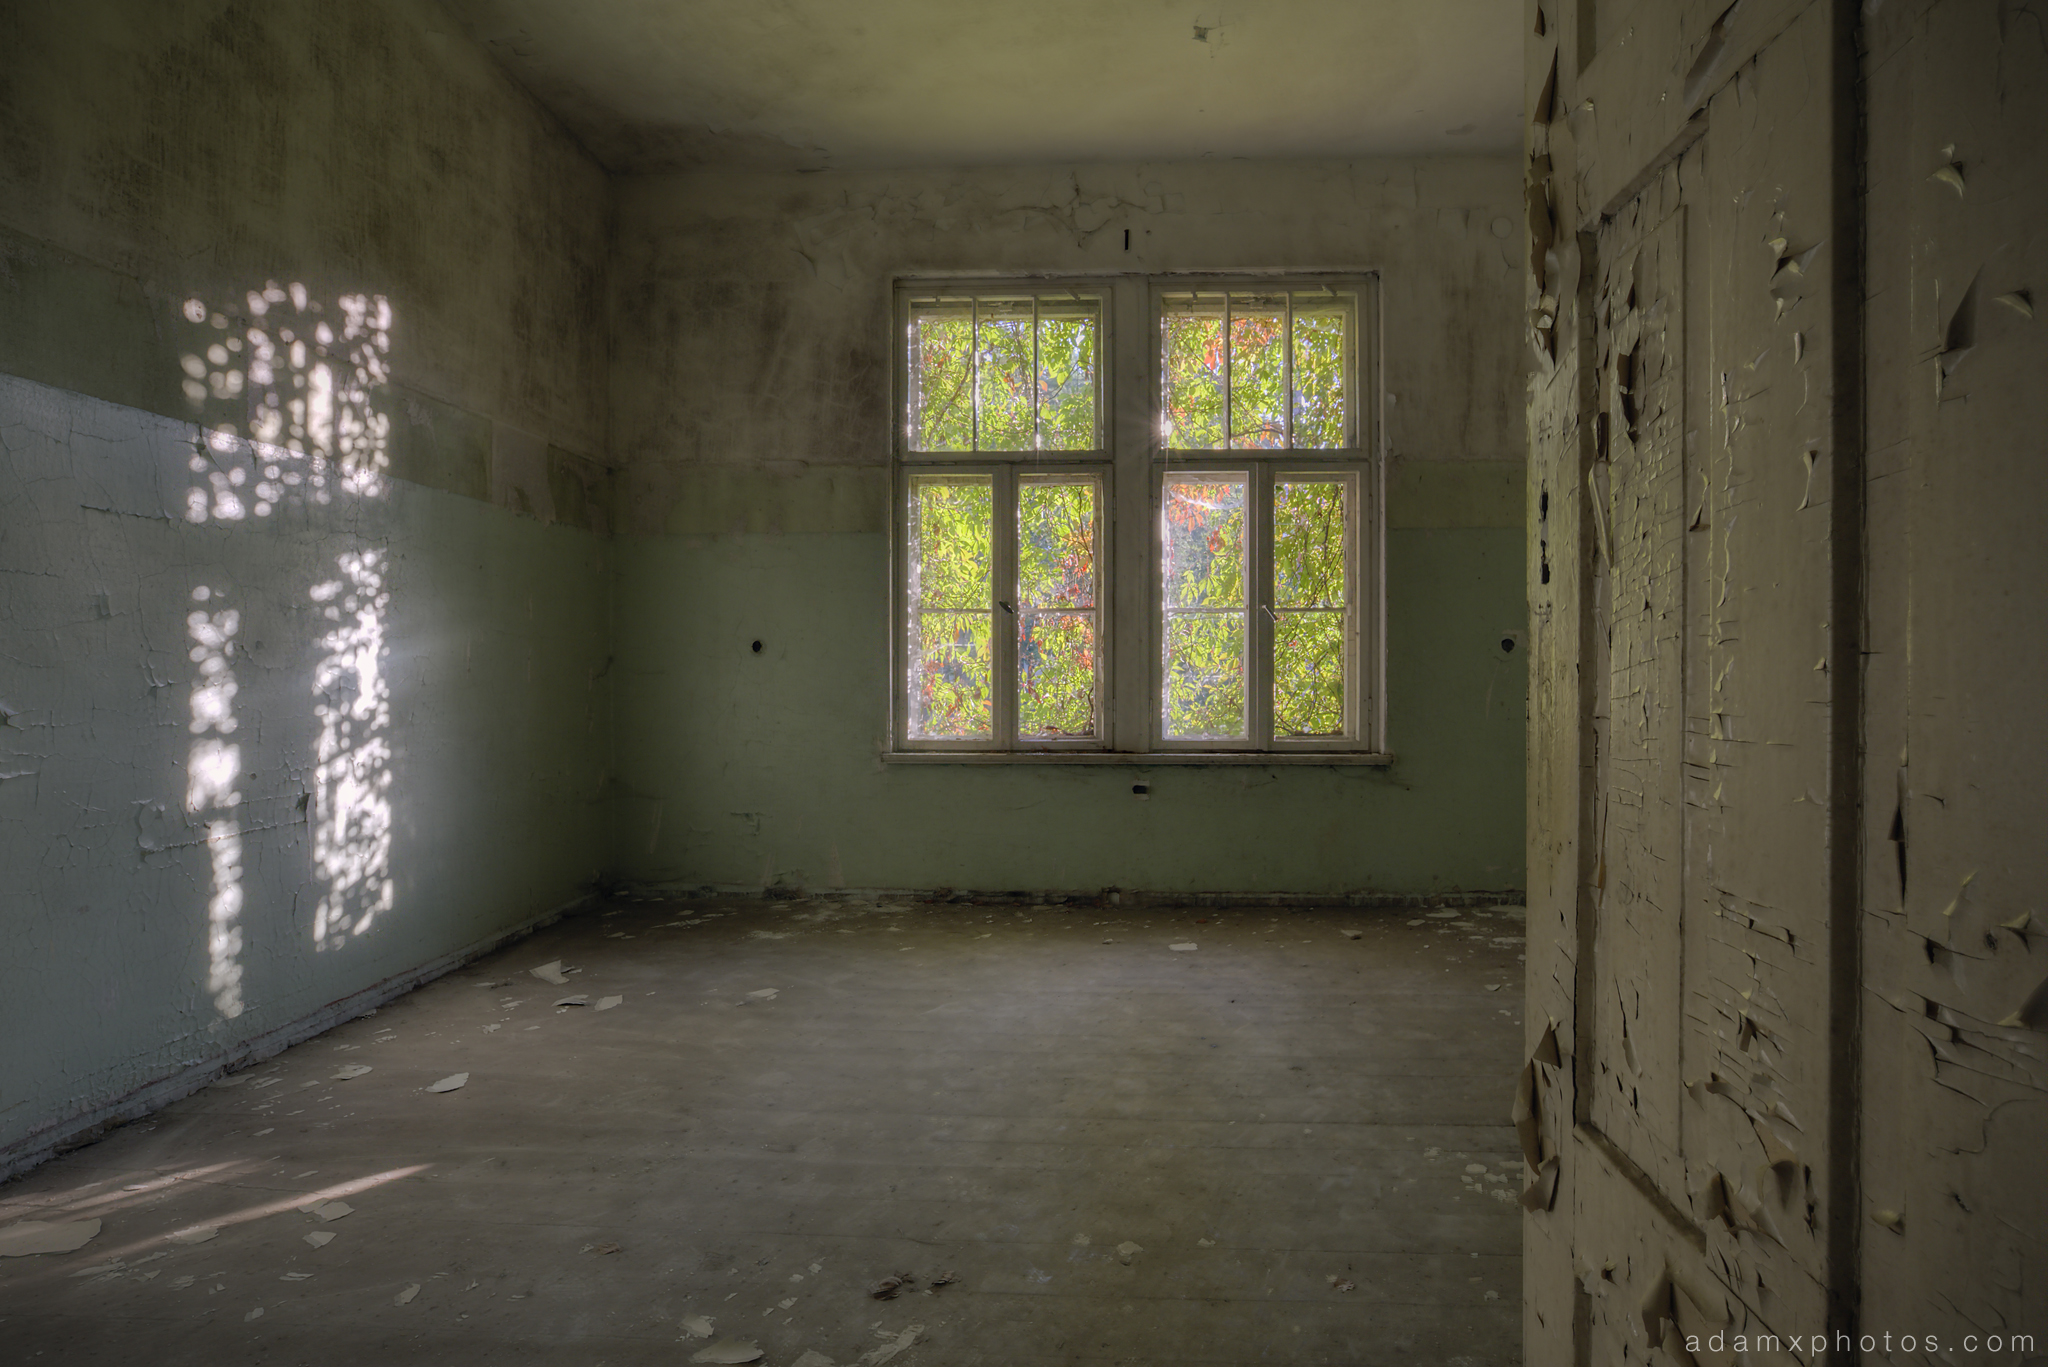 Adam X Urbex Heilstatten Hohenlychen Germany Urban Exploration Decay Lost Abandoned Hidden room peeling paint shadow